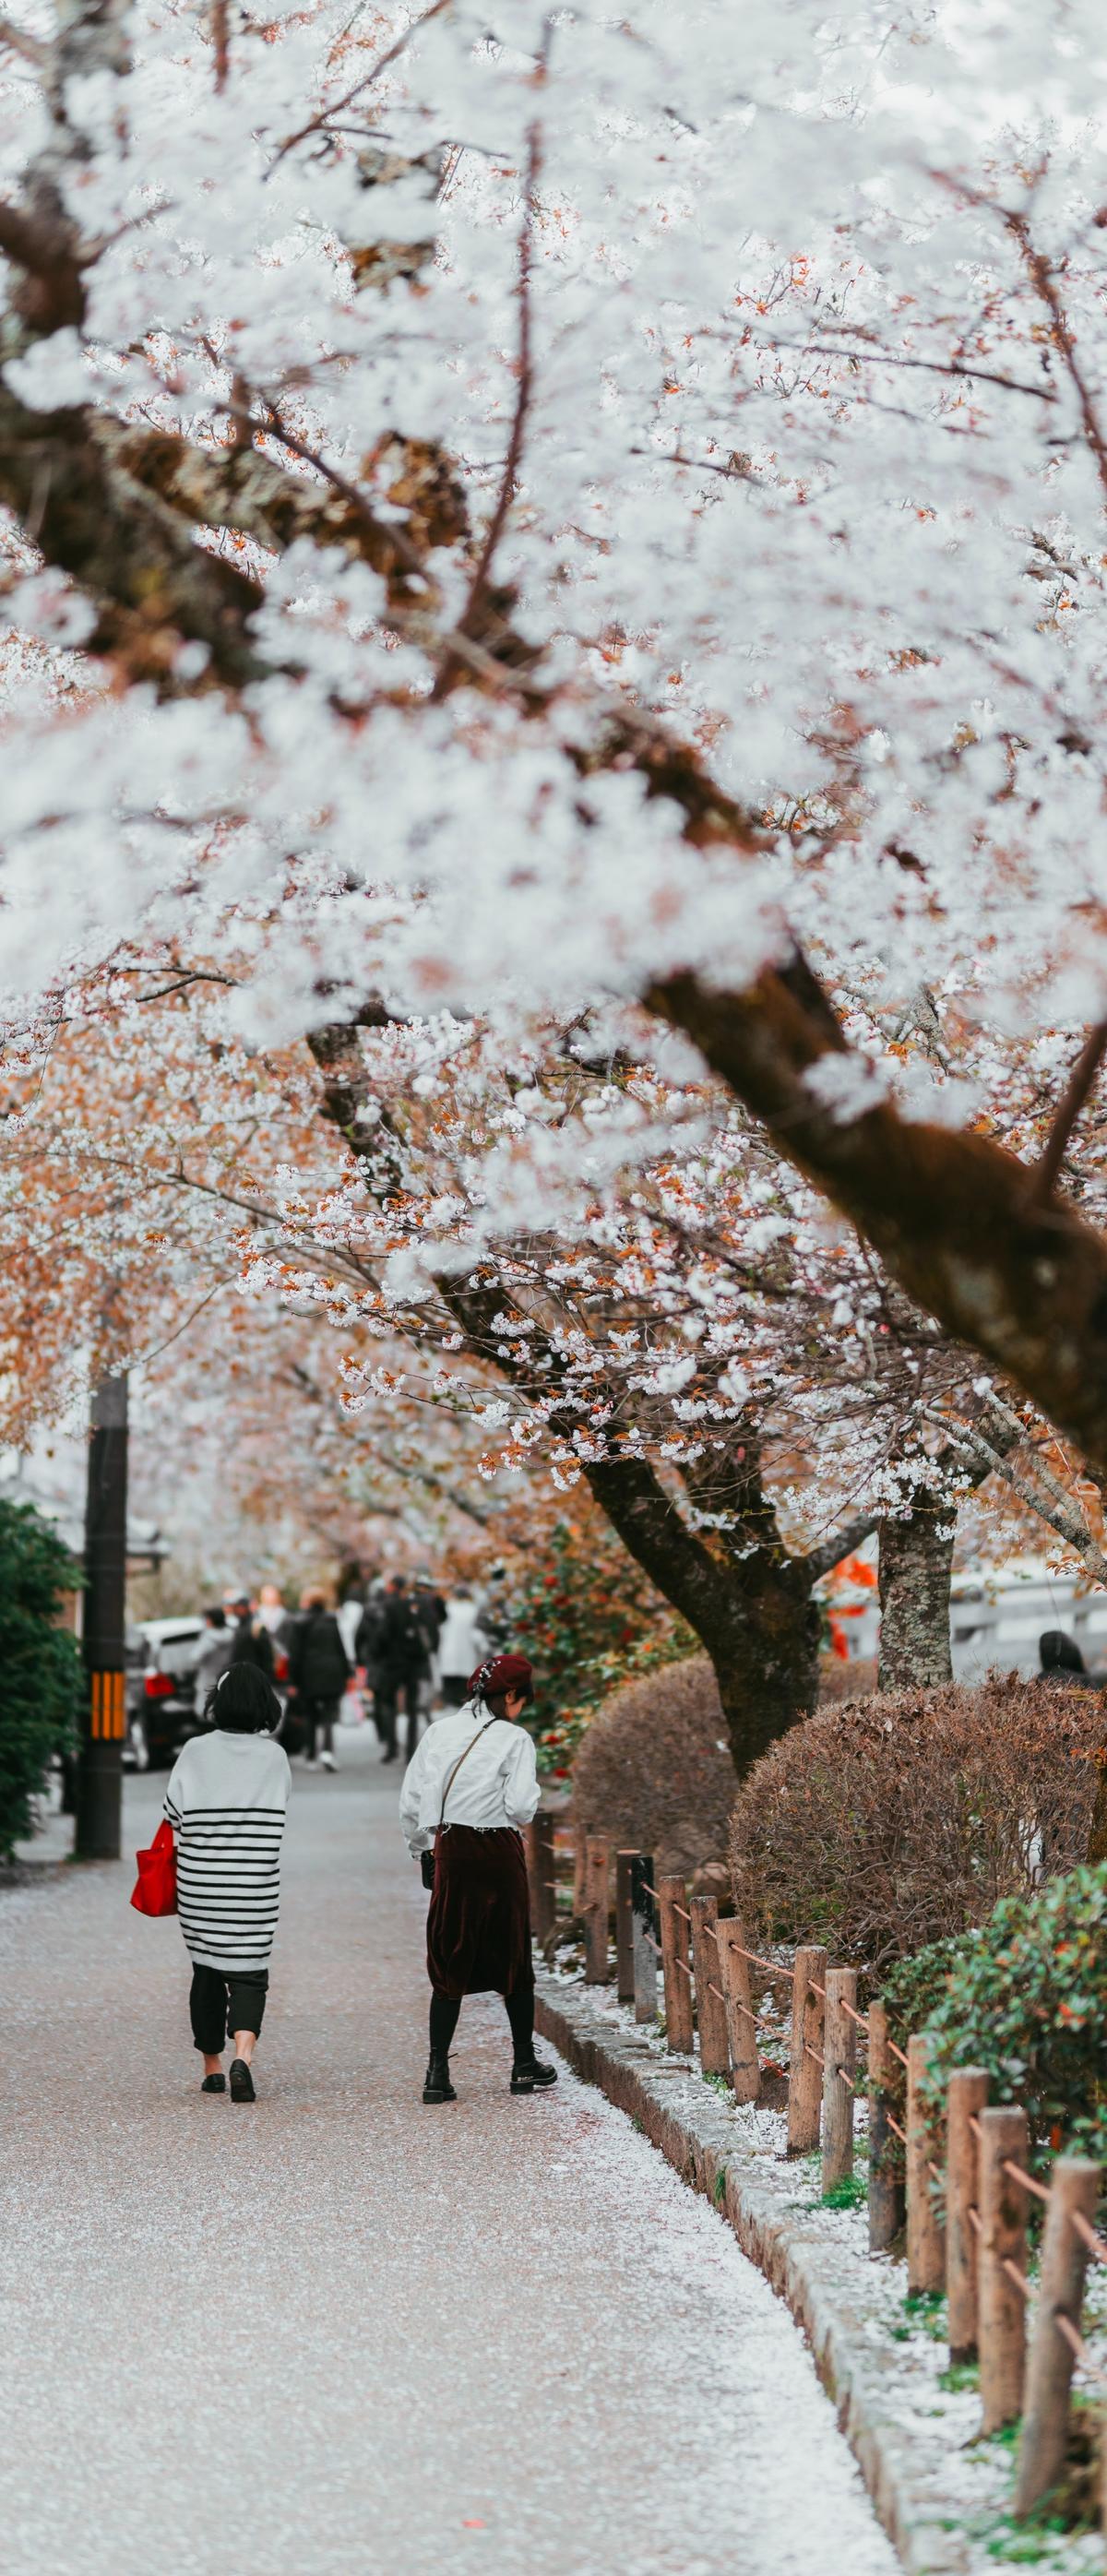 Walking under cherry blossoms